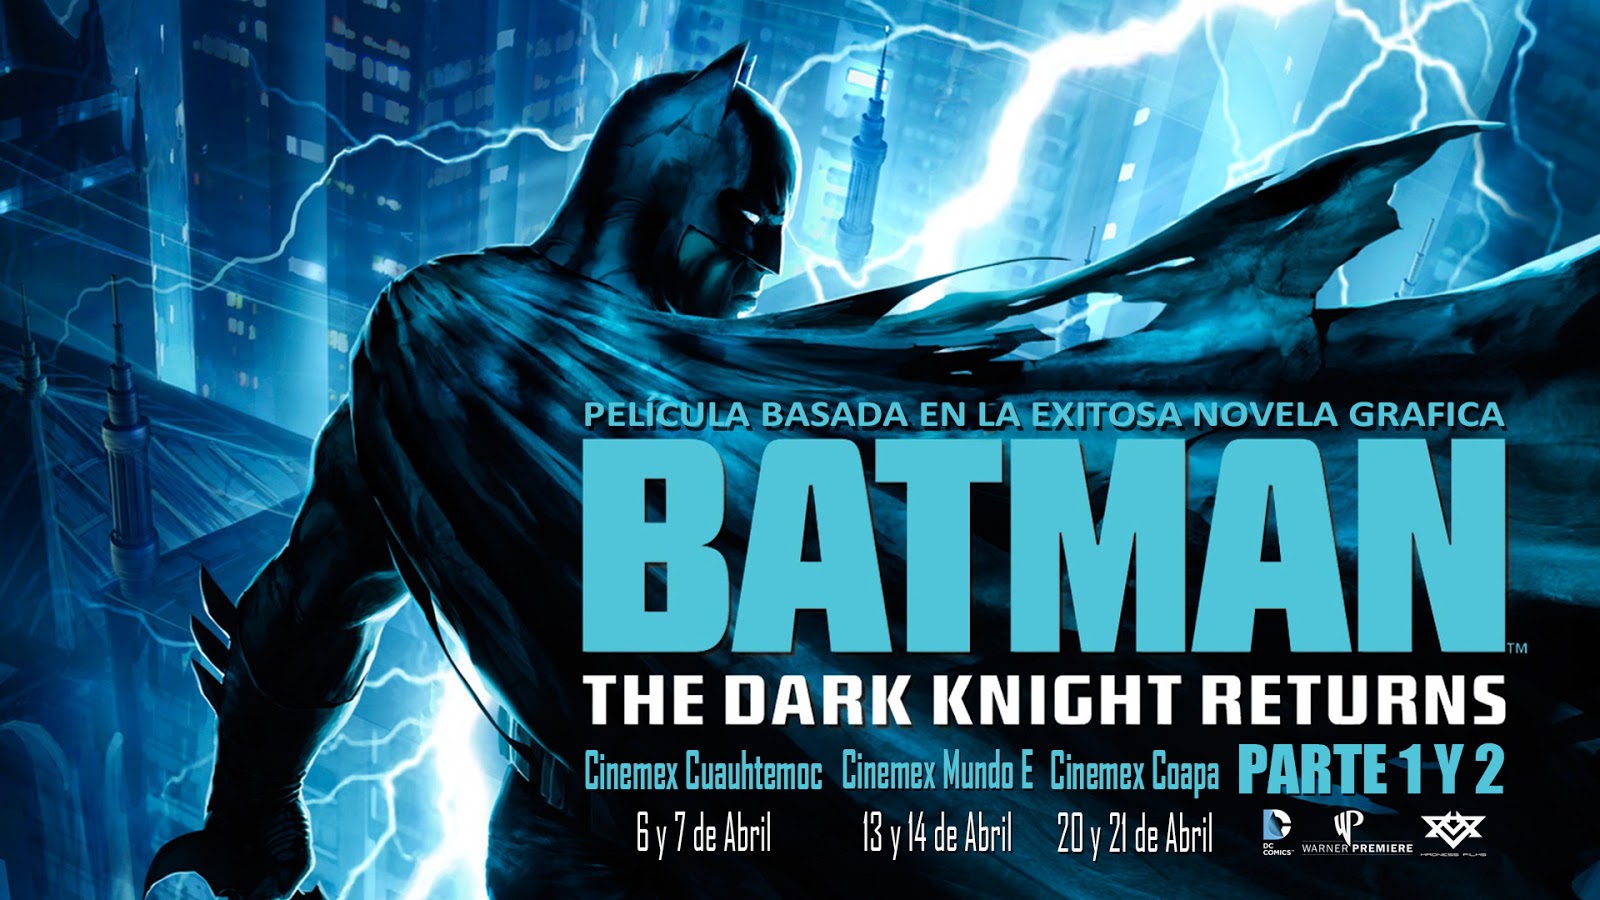 Comikaze: PROYECCIONES DE BATMAN: THE DARK KNIGHT RETURNS, EN CINEMEX